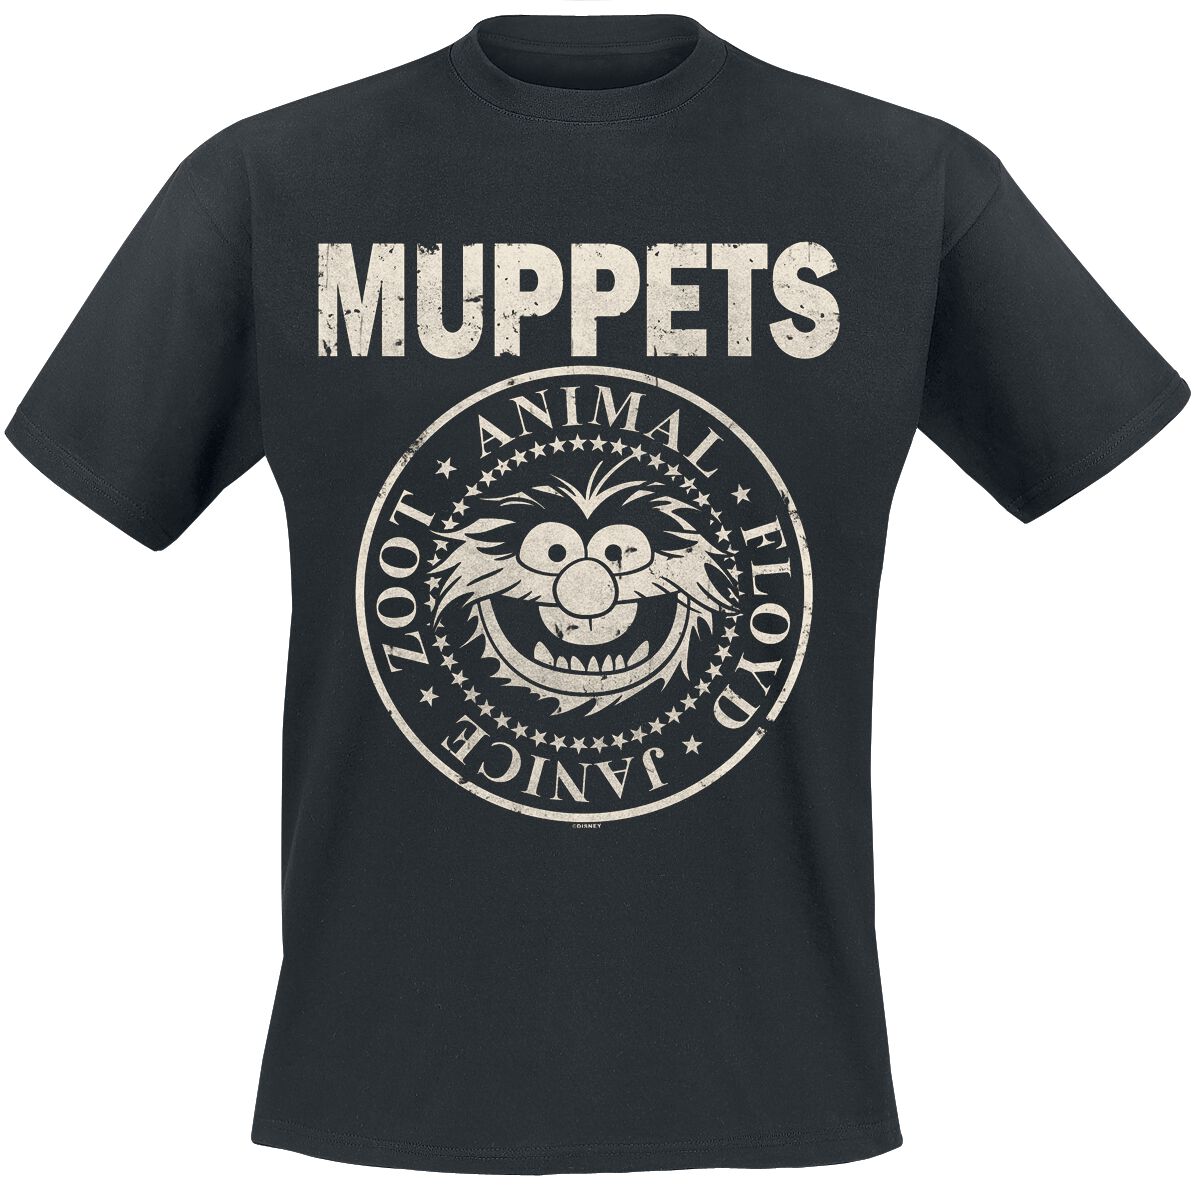 Die Muppets Animal - Rock ´n Roll T-Shirt schwarz in S